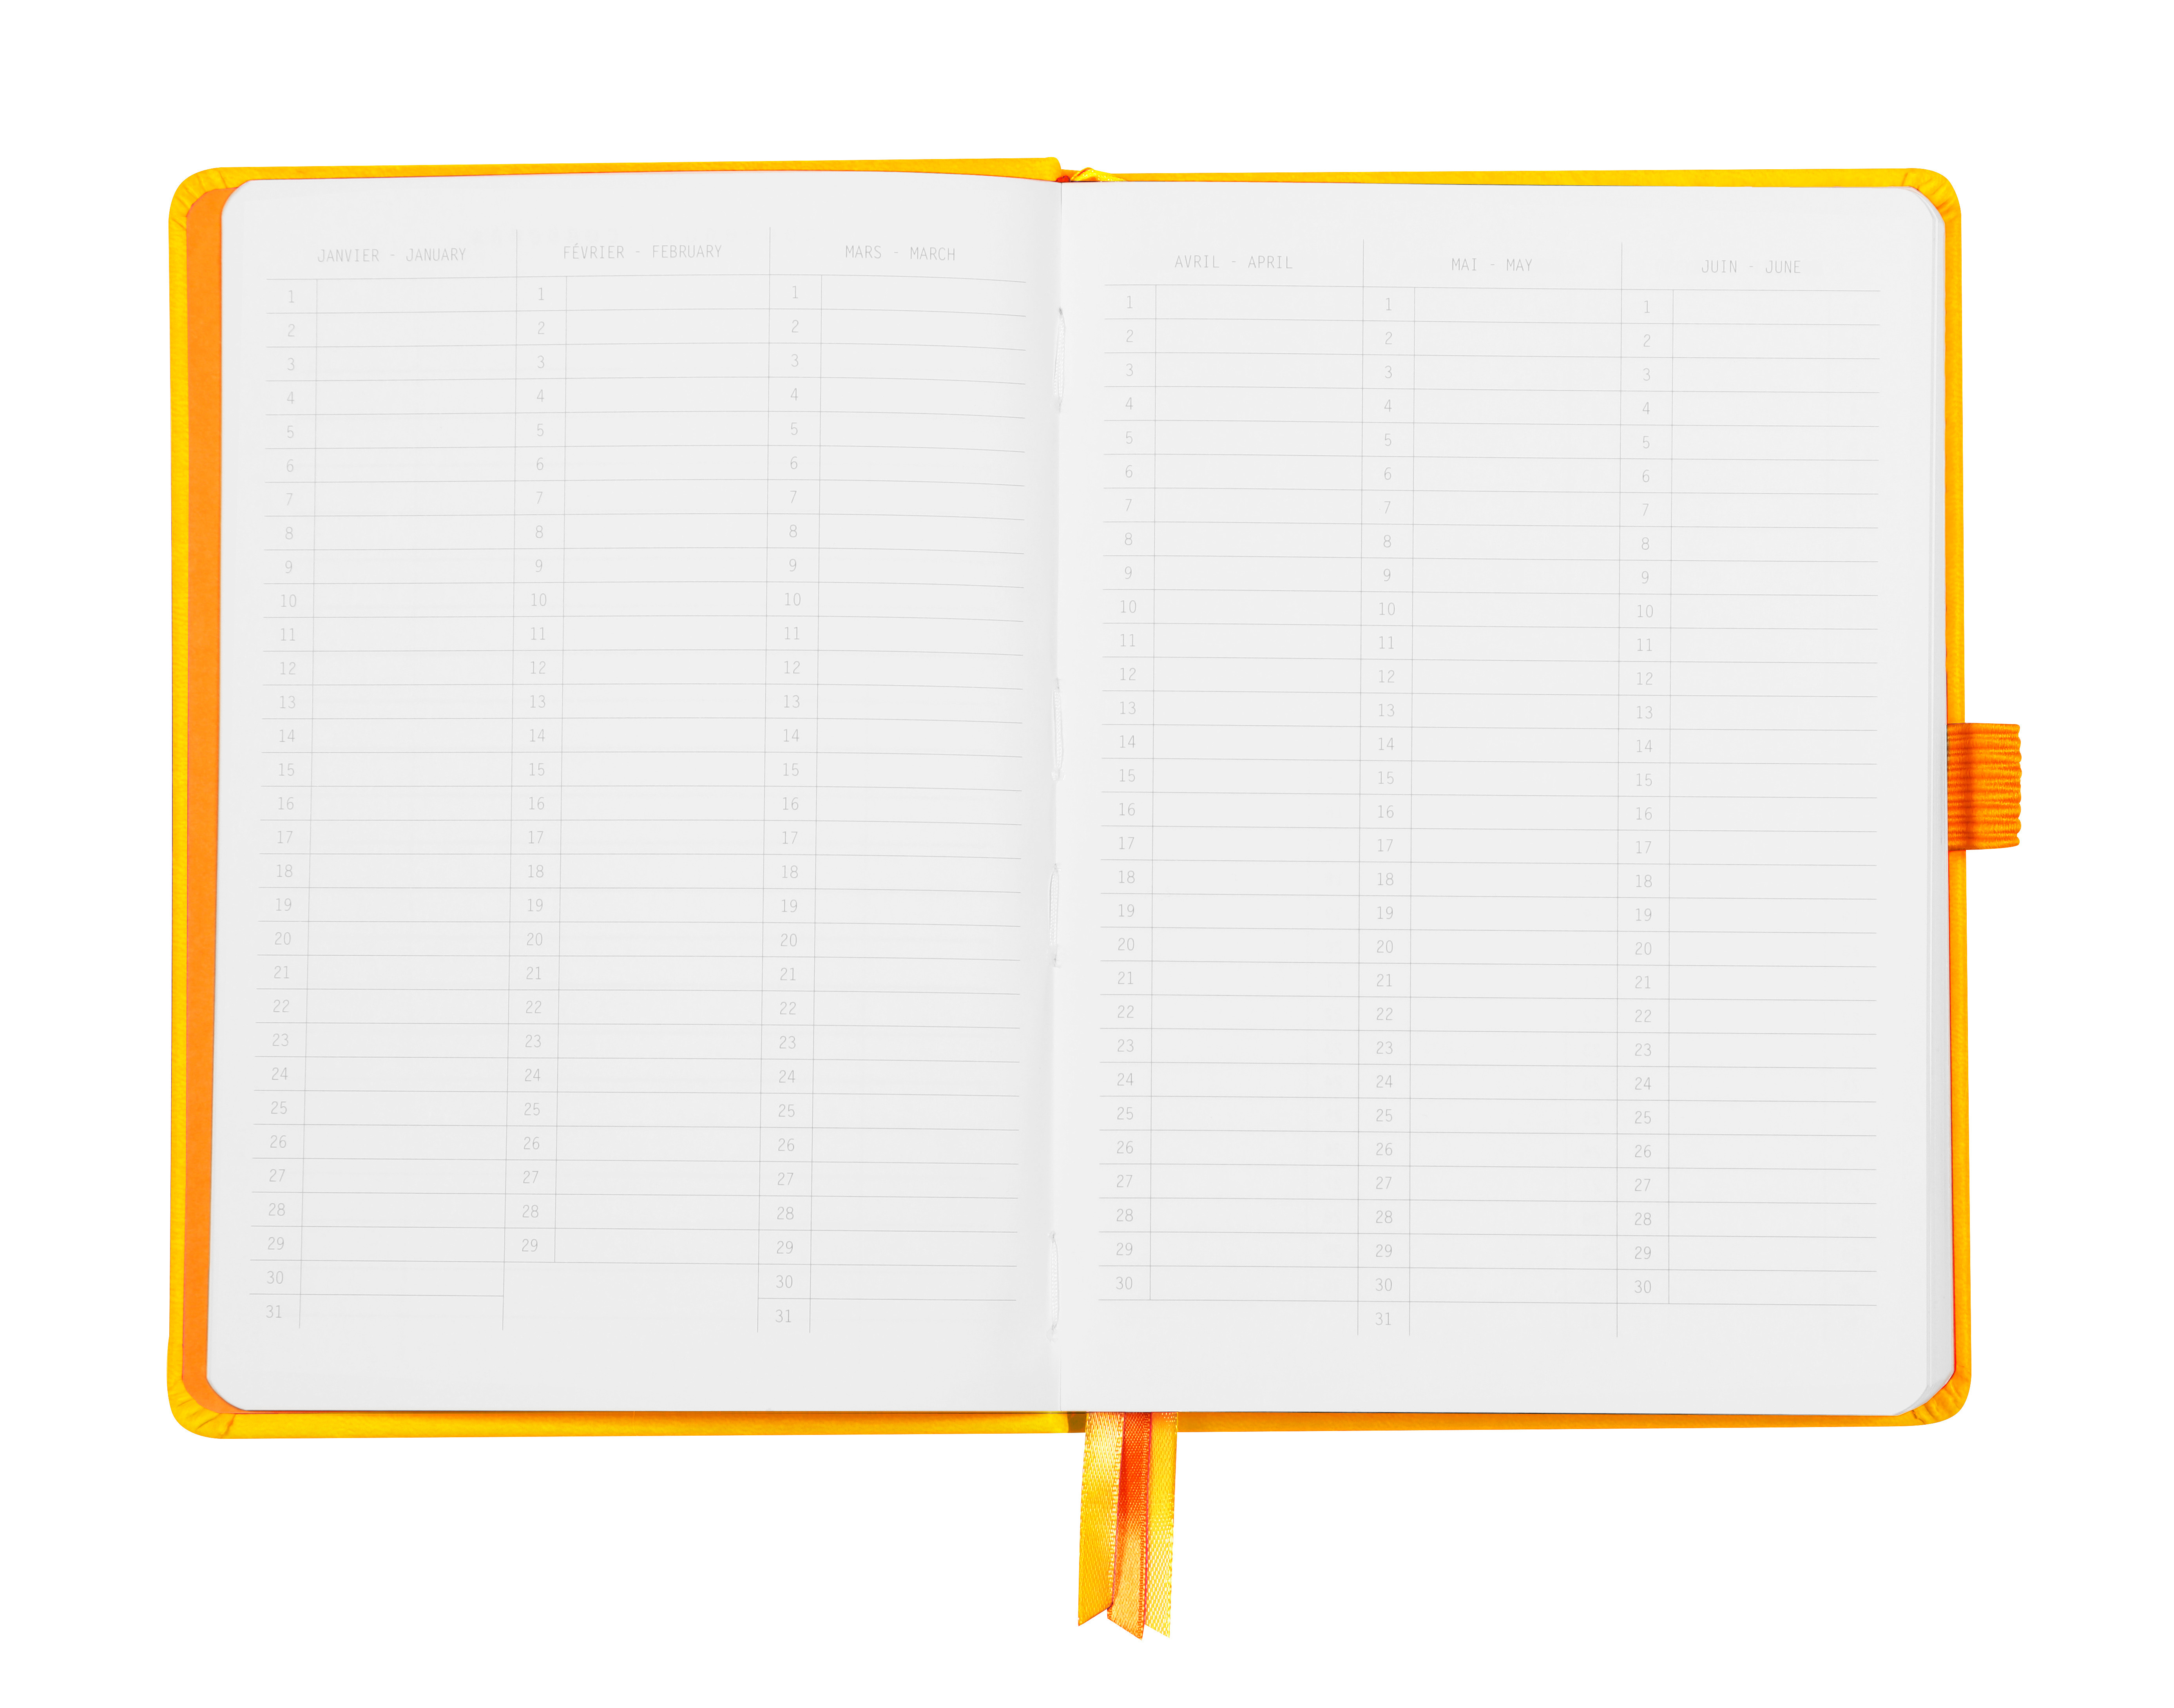 RHODIA Goalbook Carnet A5 118585C Hardcover jaune 240 f.